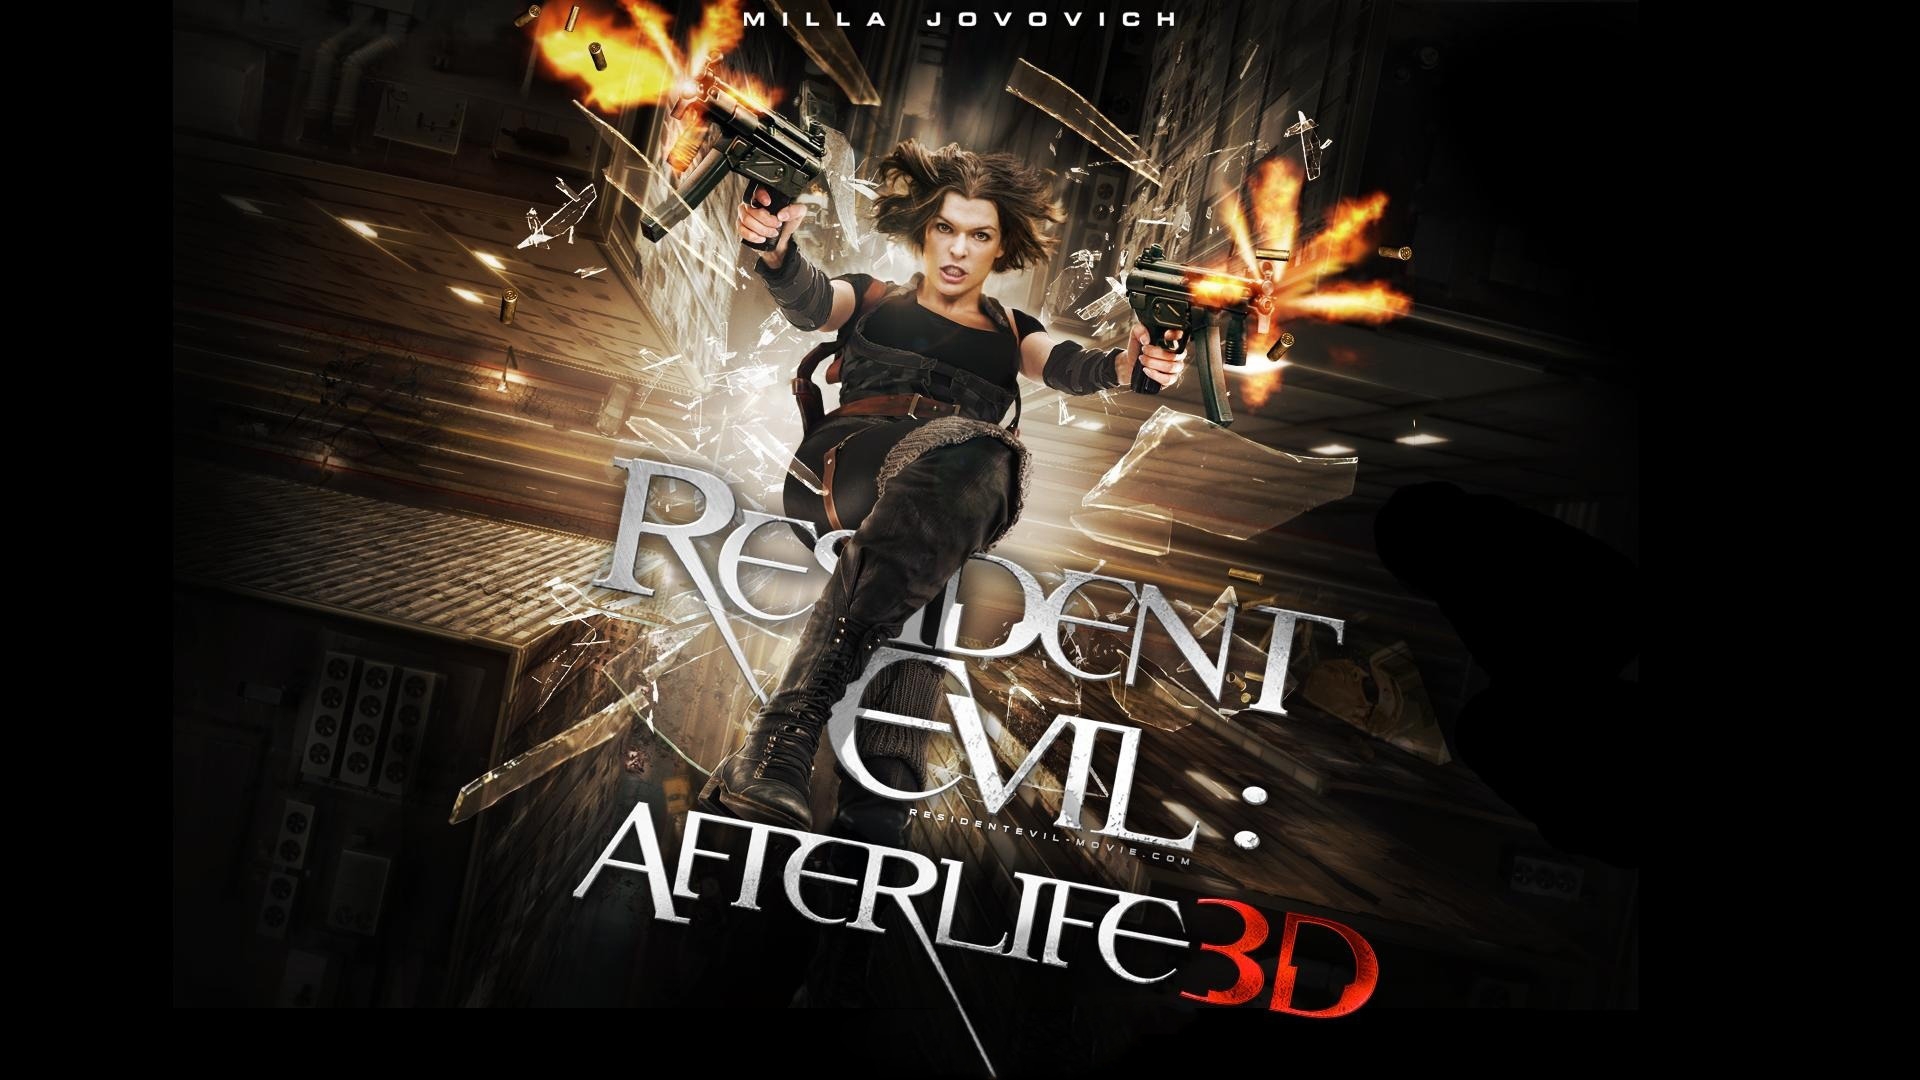 Resident Evil Afterlife 3D Poster for 1920 x 1080 HDTV 1080p resolution